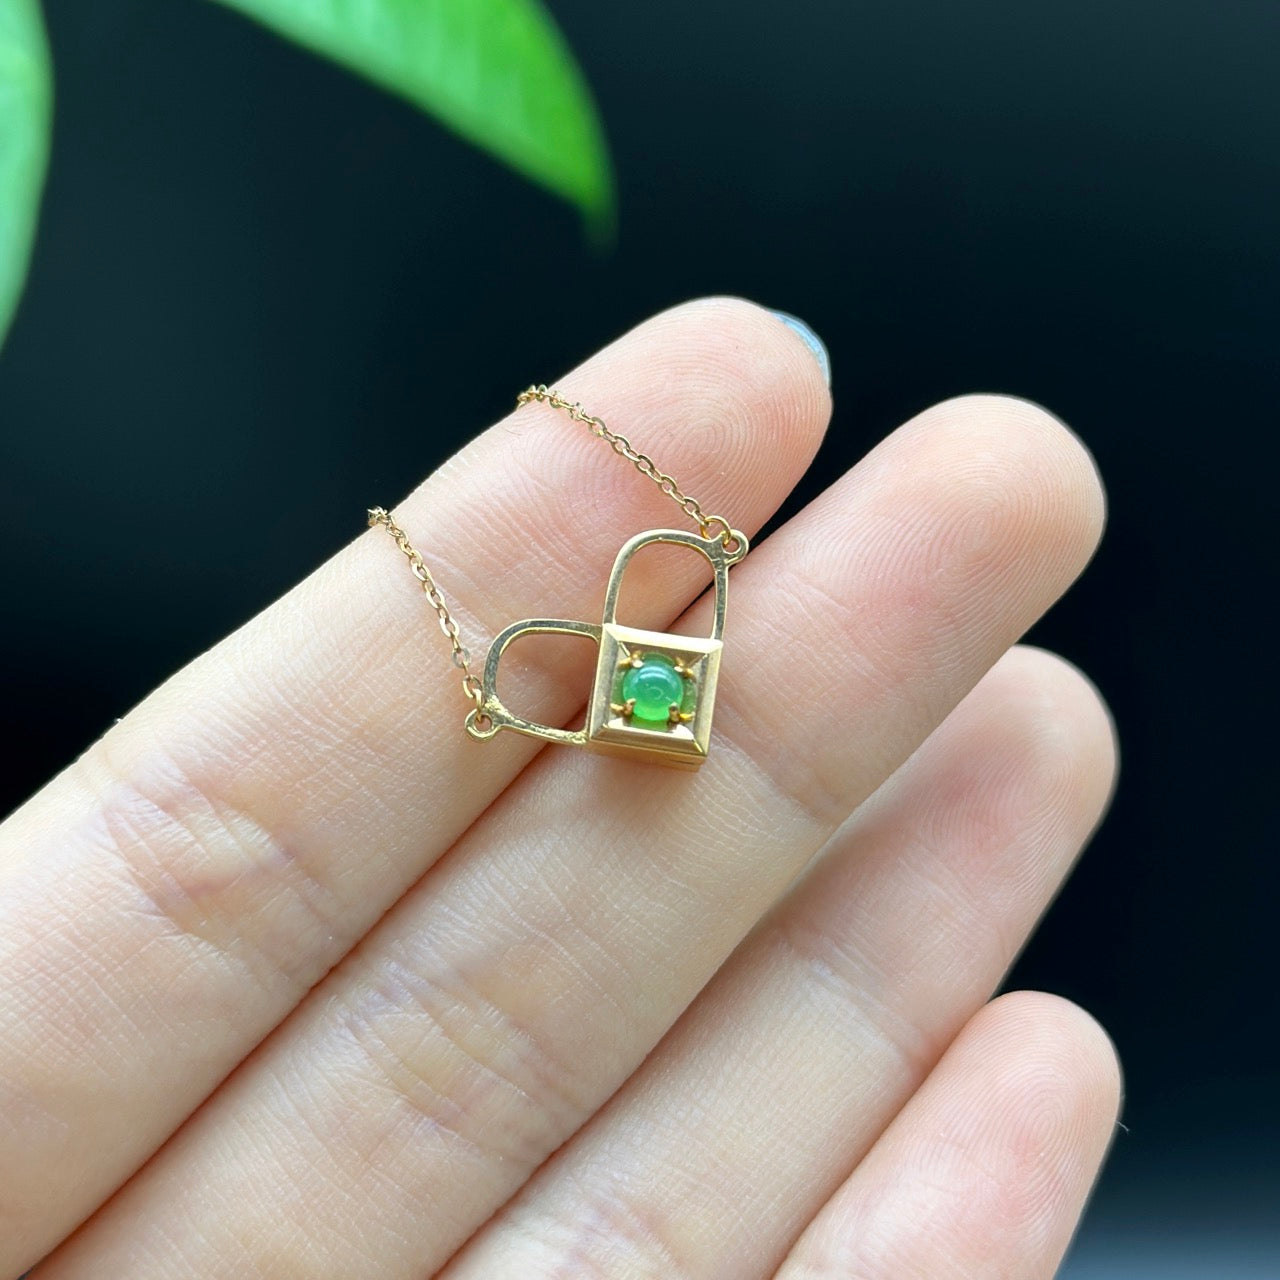 RealJade " IluvU " 18K Rose Gold Genuine Ice Green Jadeite Jade Heart Shape Pendant Necklace With Diamonds